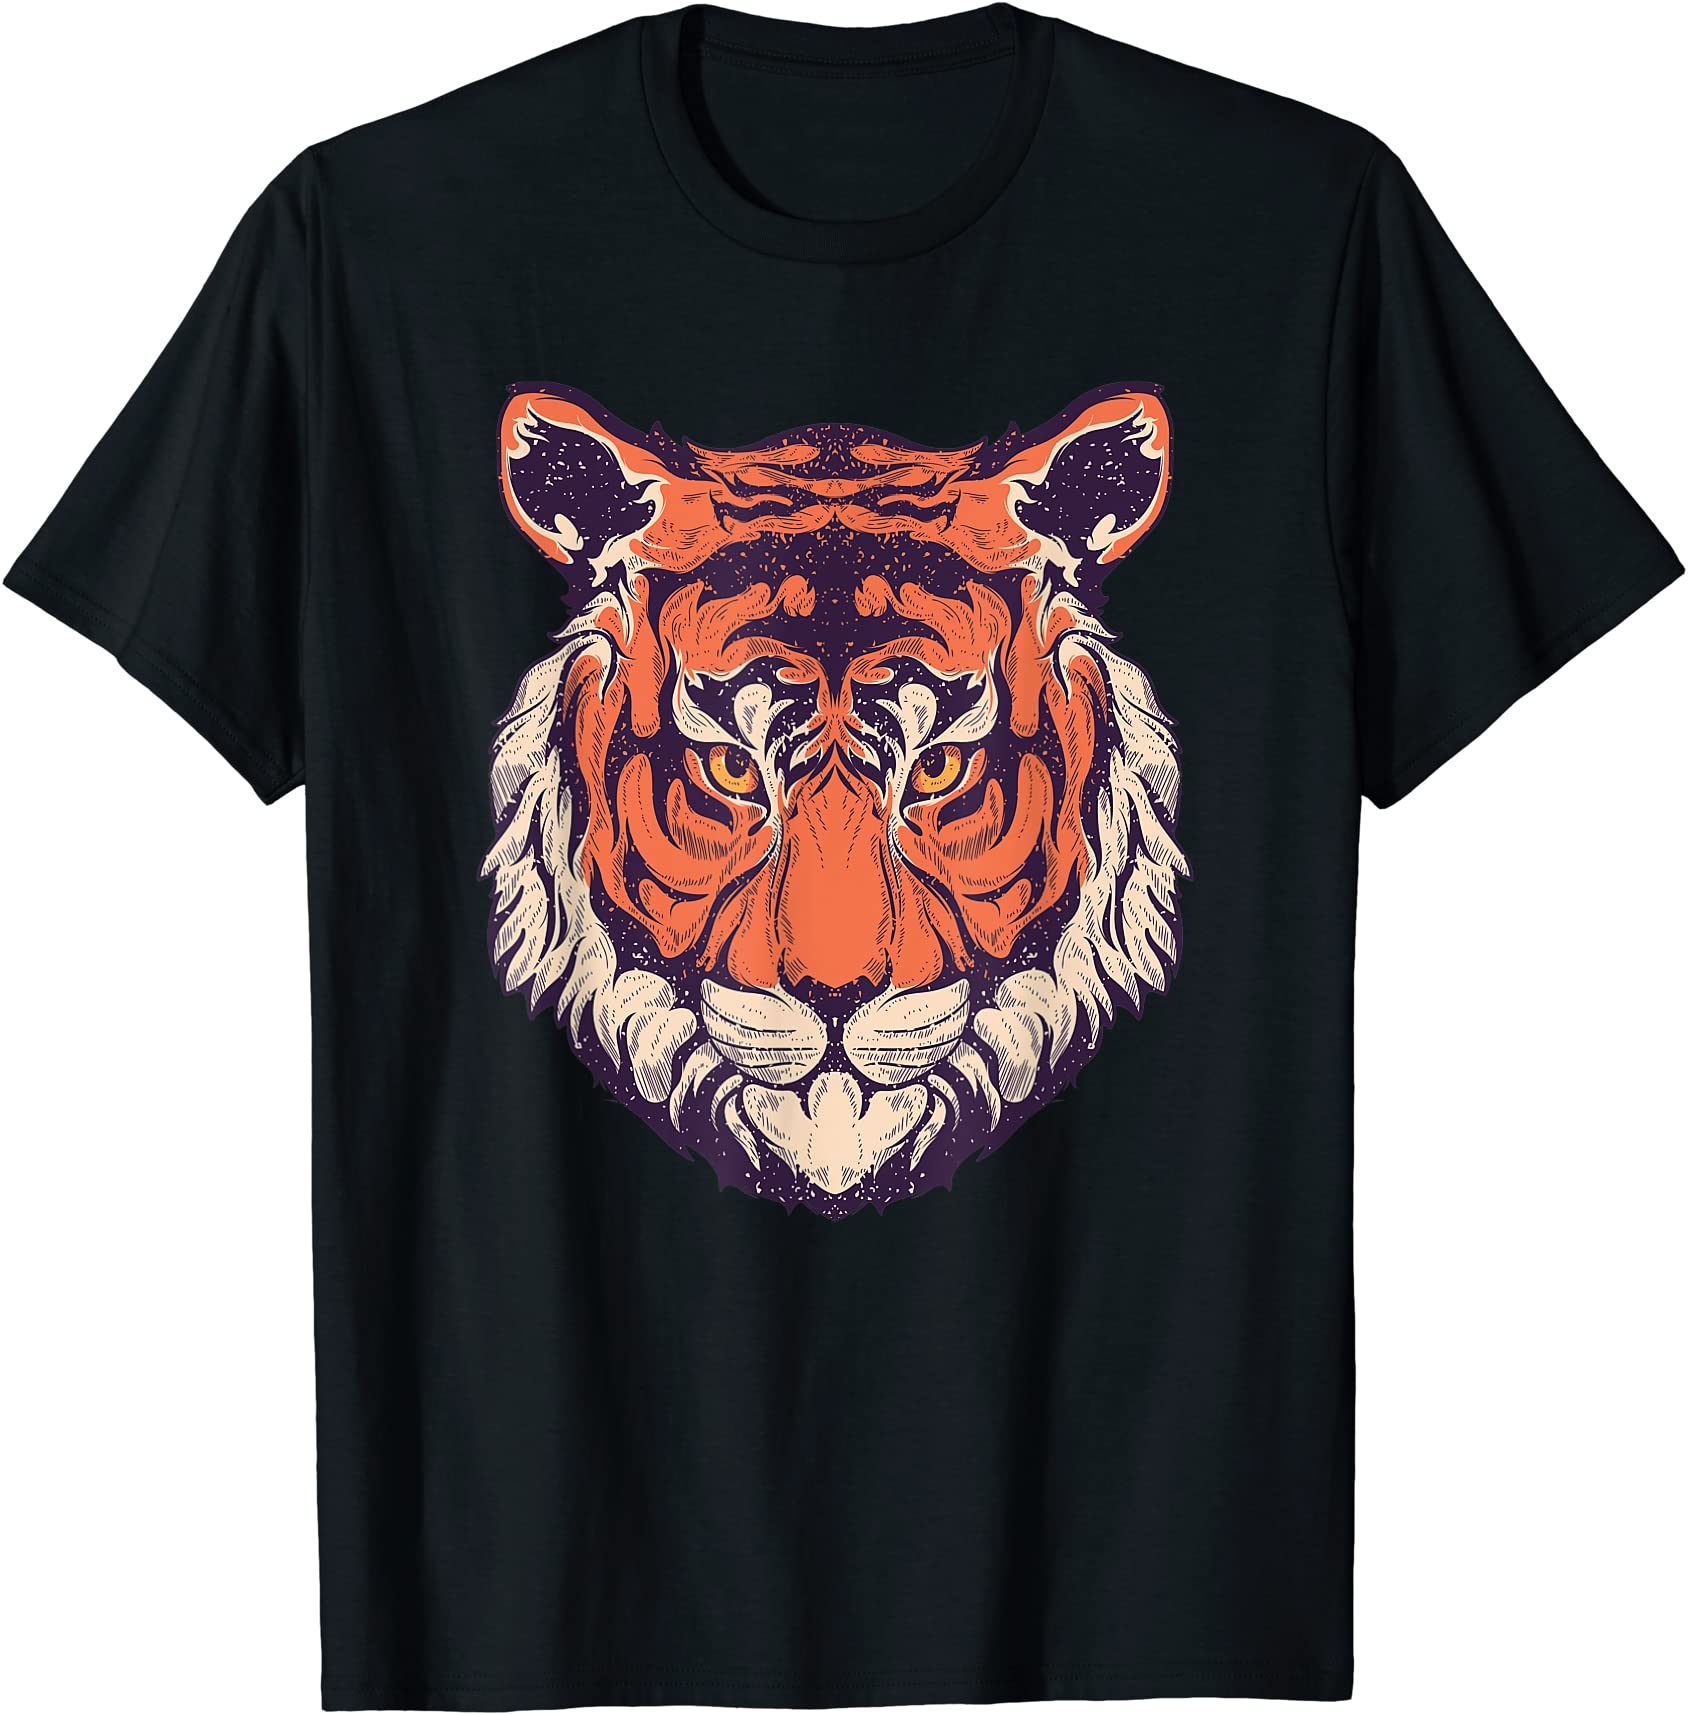 cool wild tiger tee shirts tiger fashion graphic design t shirt men ...